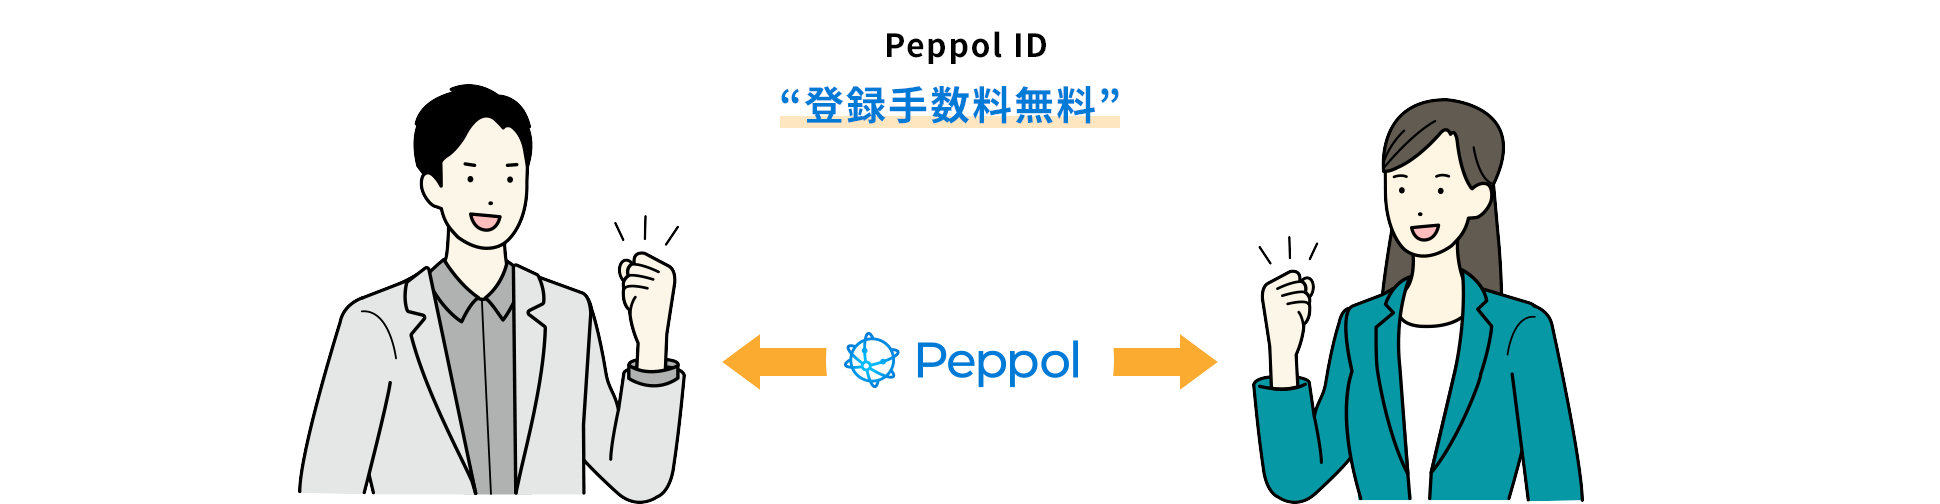 Peppol送受信 スタート応援キャンペーン イラスト